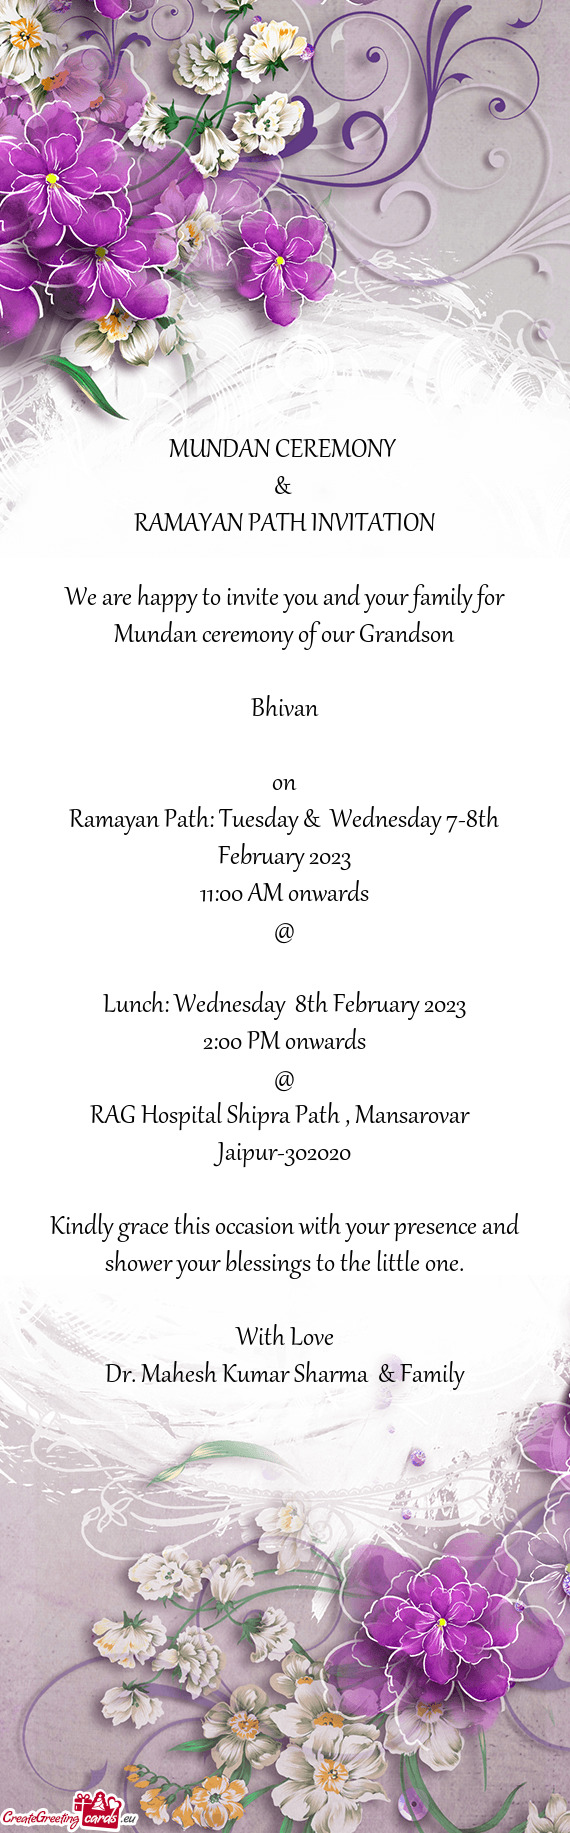 Ramayan Path: Tuesday & Wednesday 7-8th February 2023